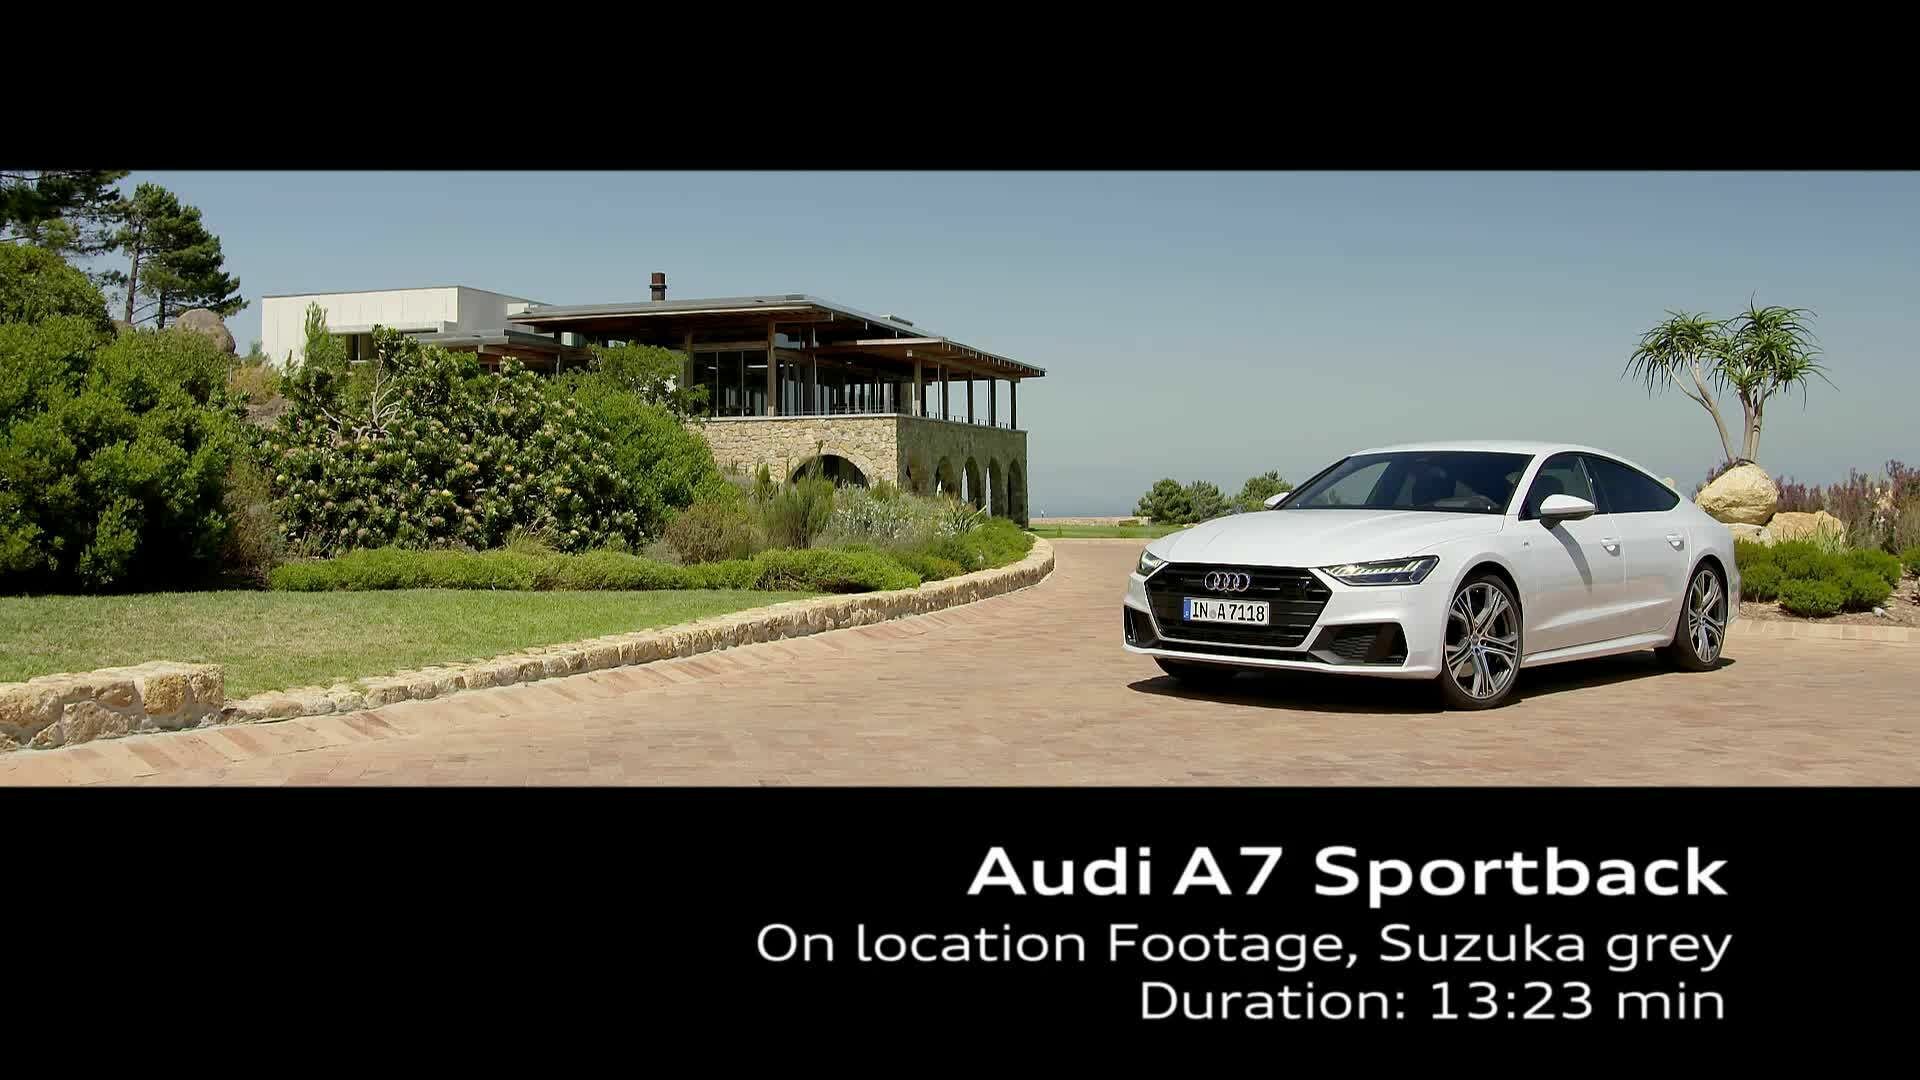 Audi A7 Sportback in Suzukagrau – on Location Footage Kapstadt